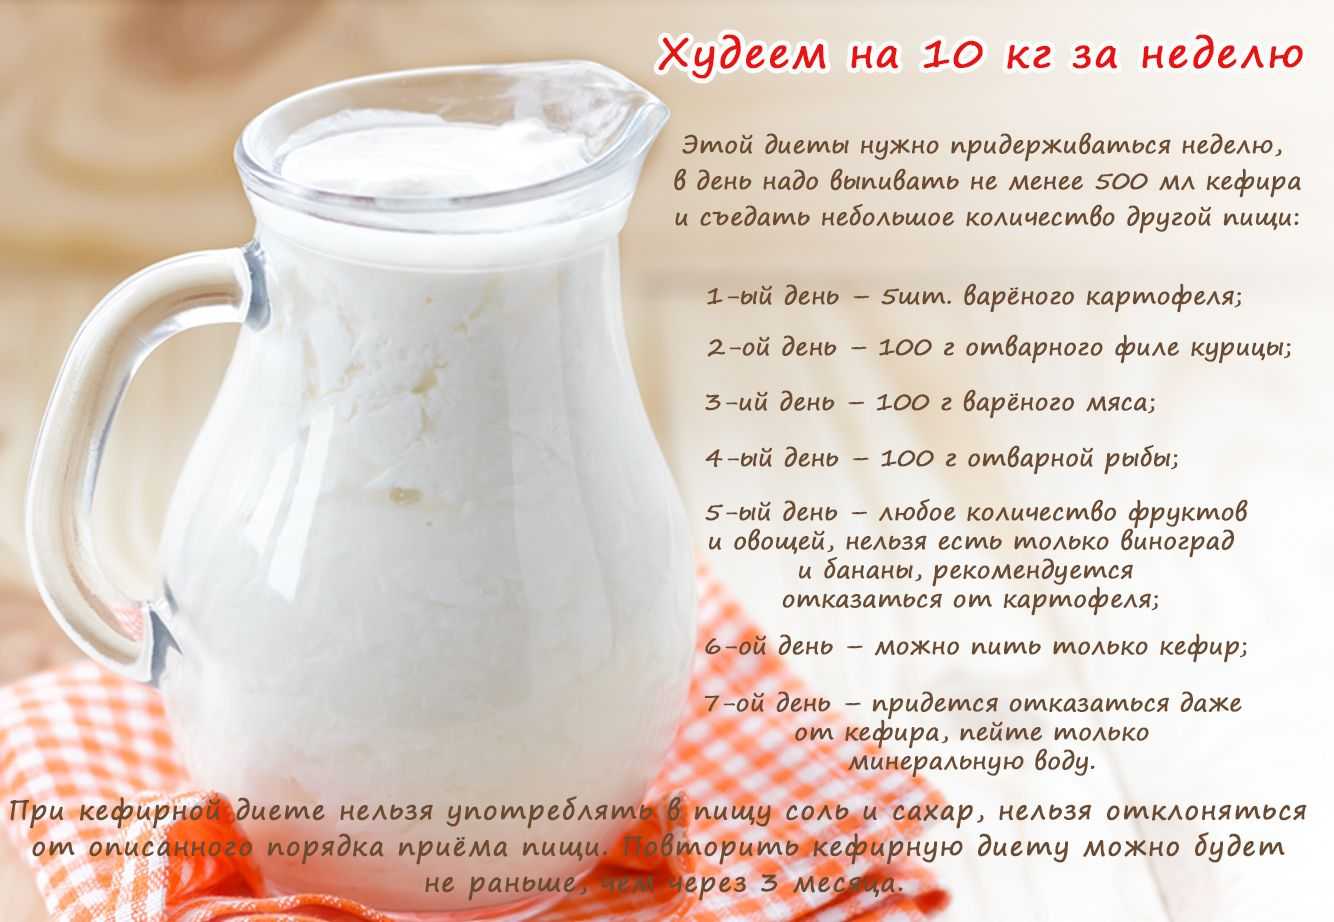 Диета для похудения за неделю на 7 кг | poudre.ru